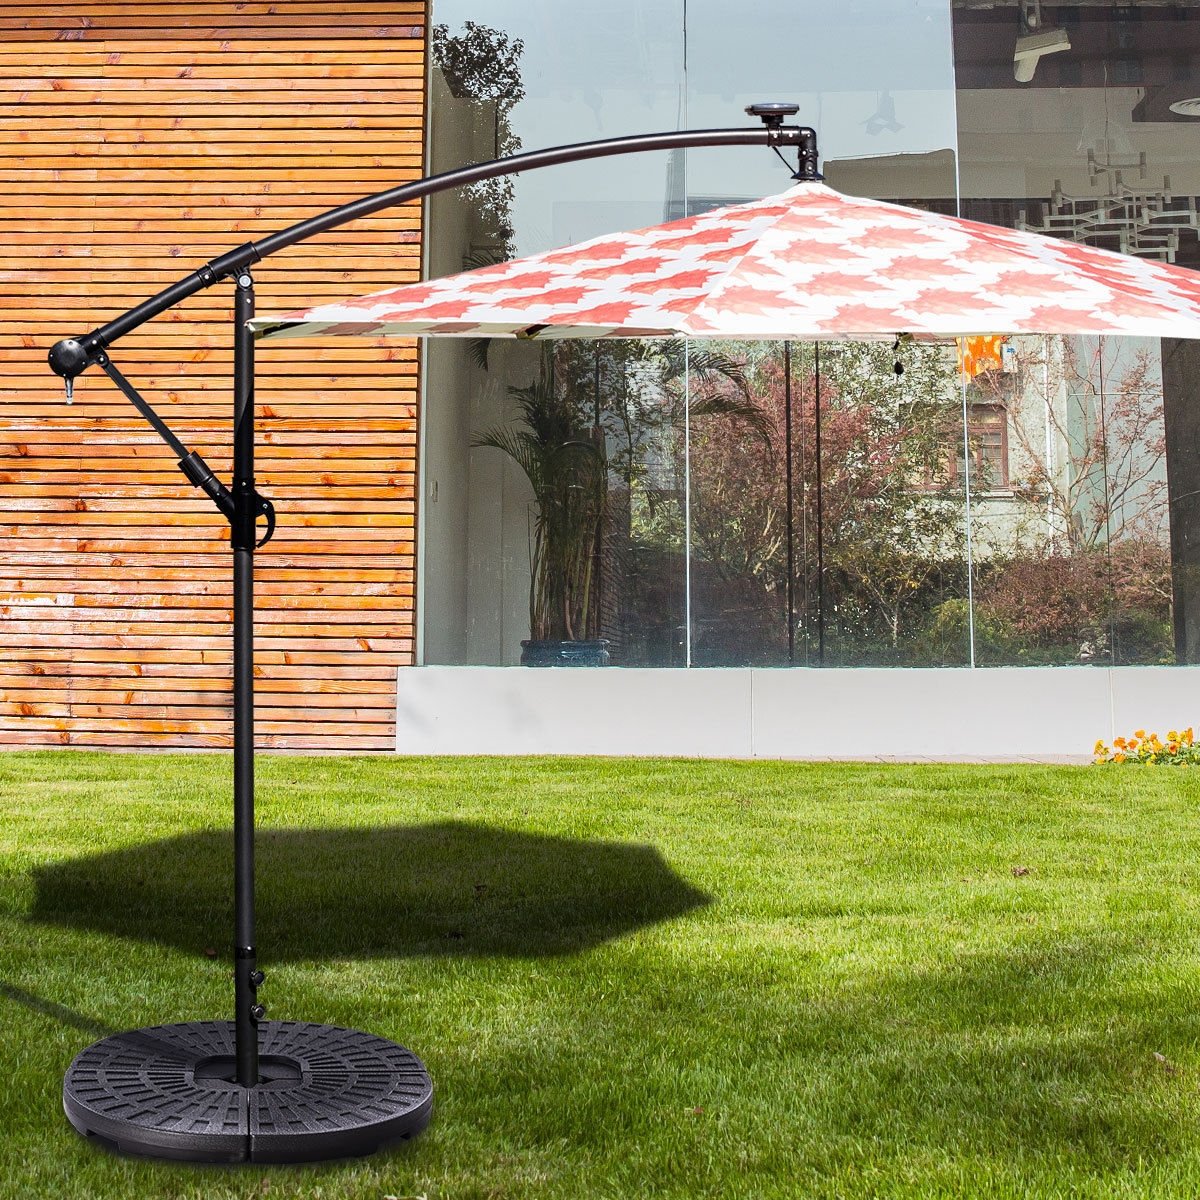 4 Pieces Round Cantilever Umbrella Base with Carry Handles for Garden, Black - Gallery Canada